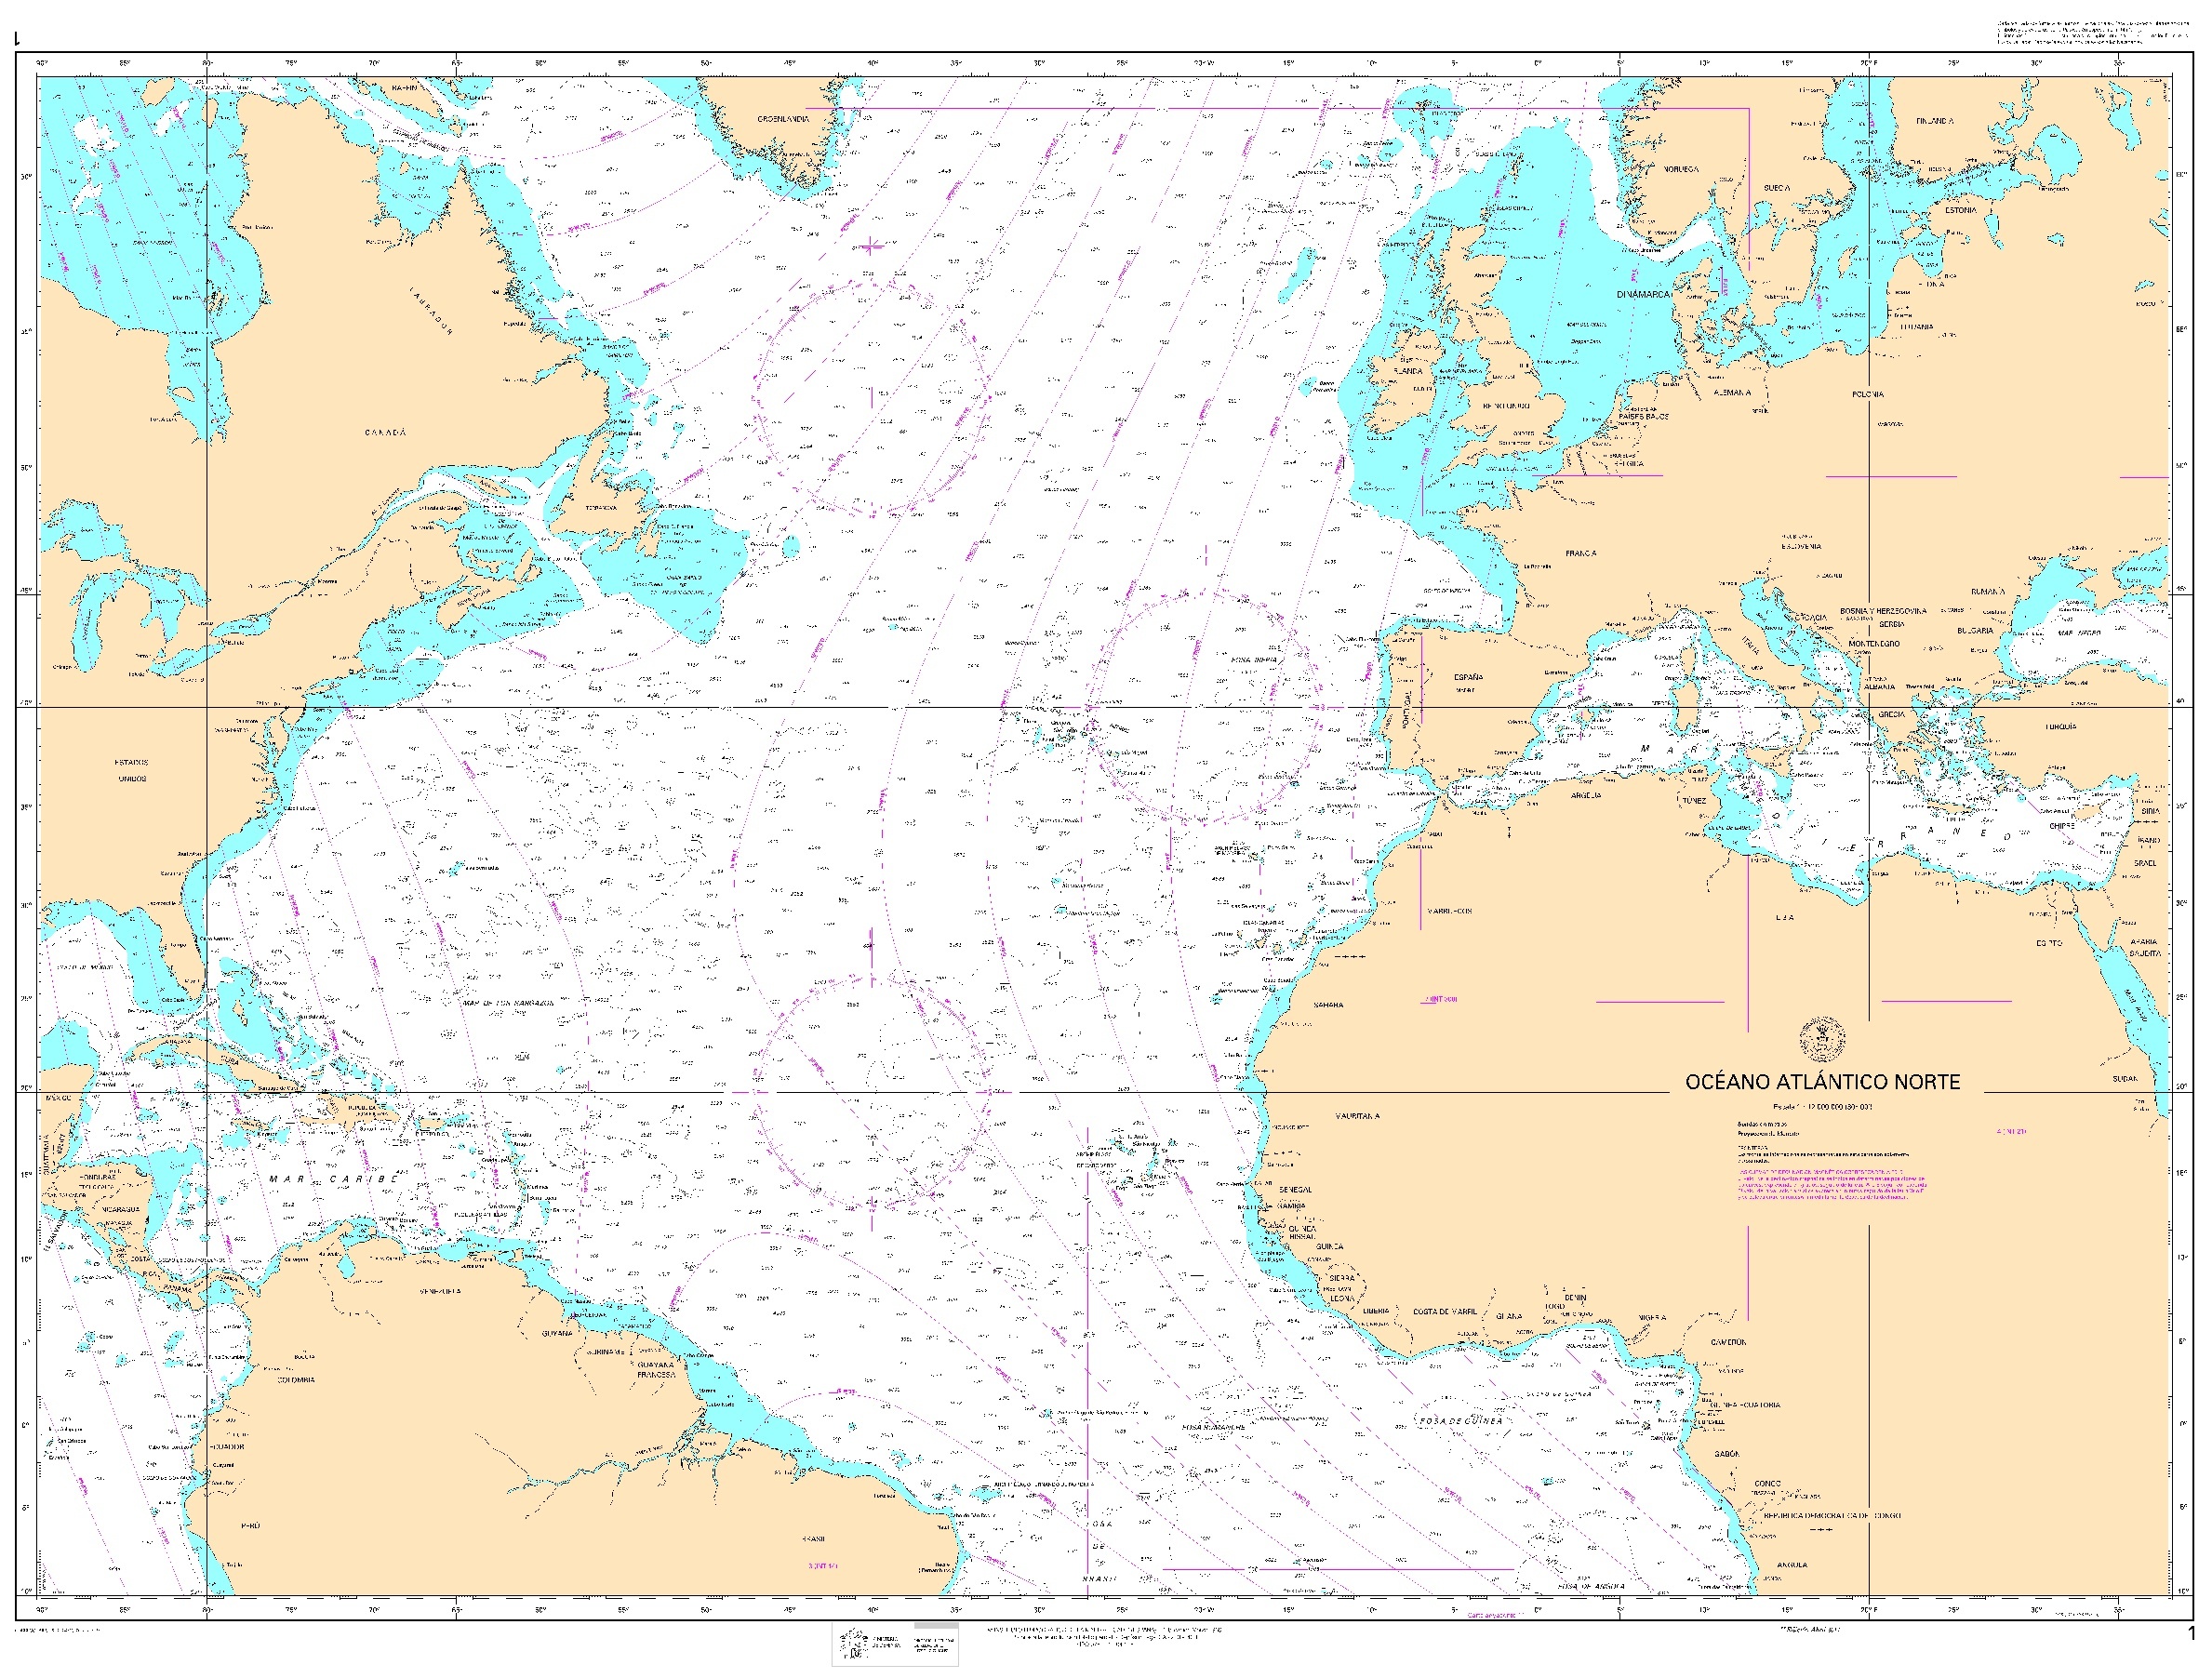 1 Océano Atlántico Norte ". 1:12000000. 1:12000000"